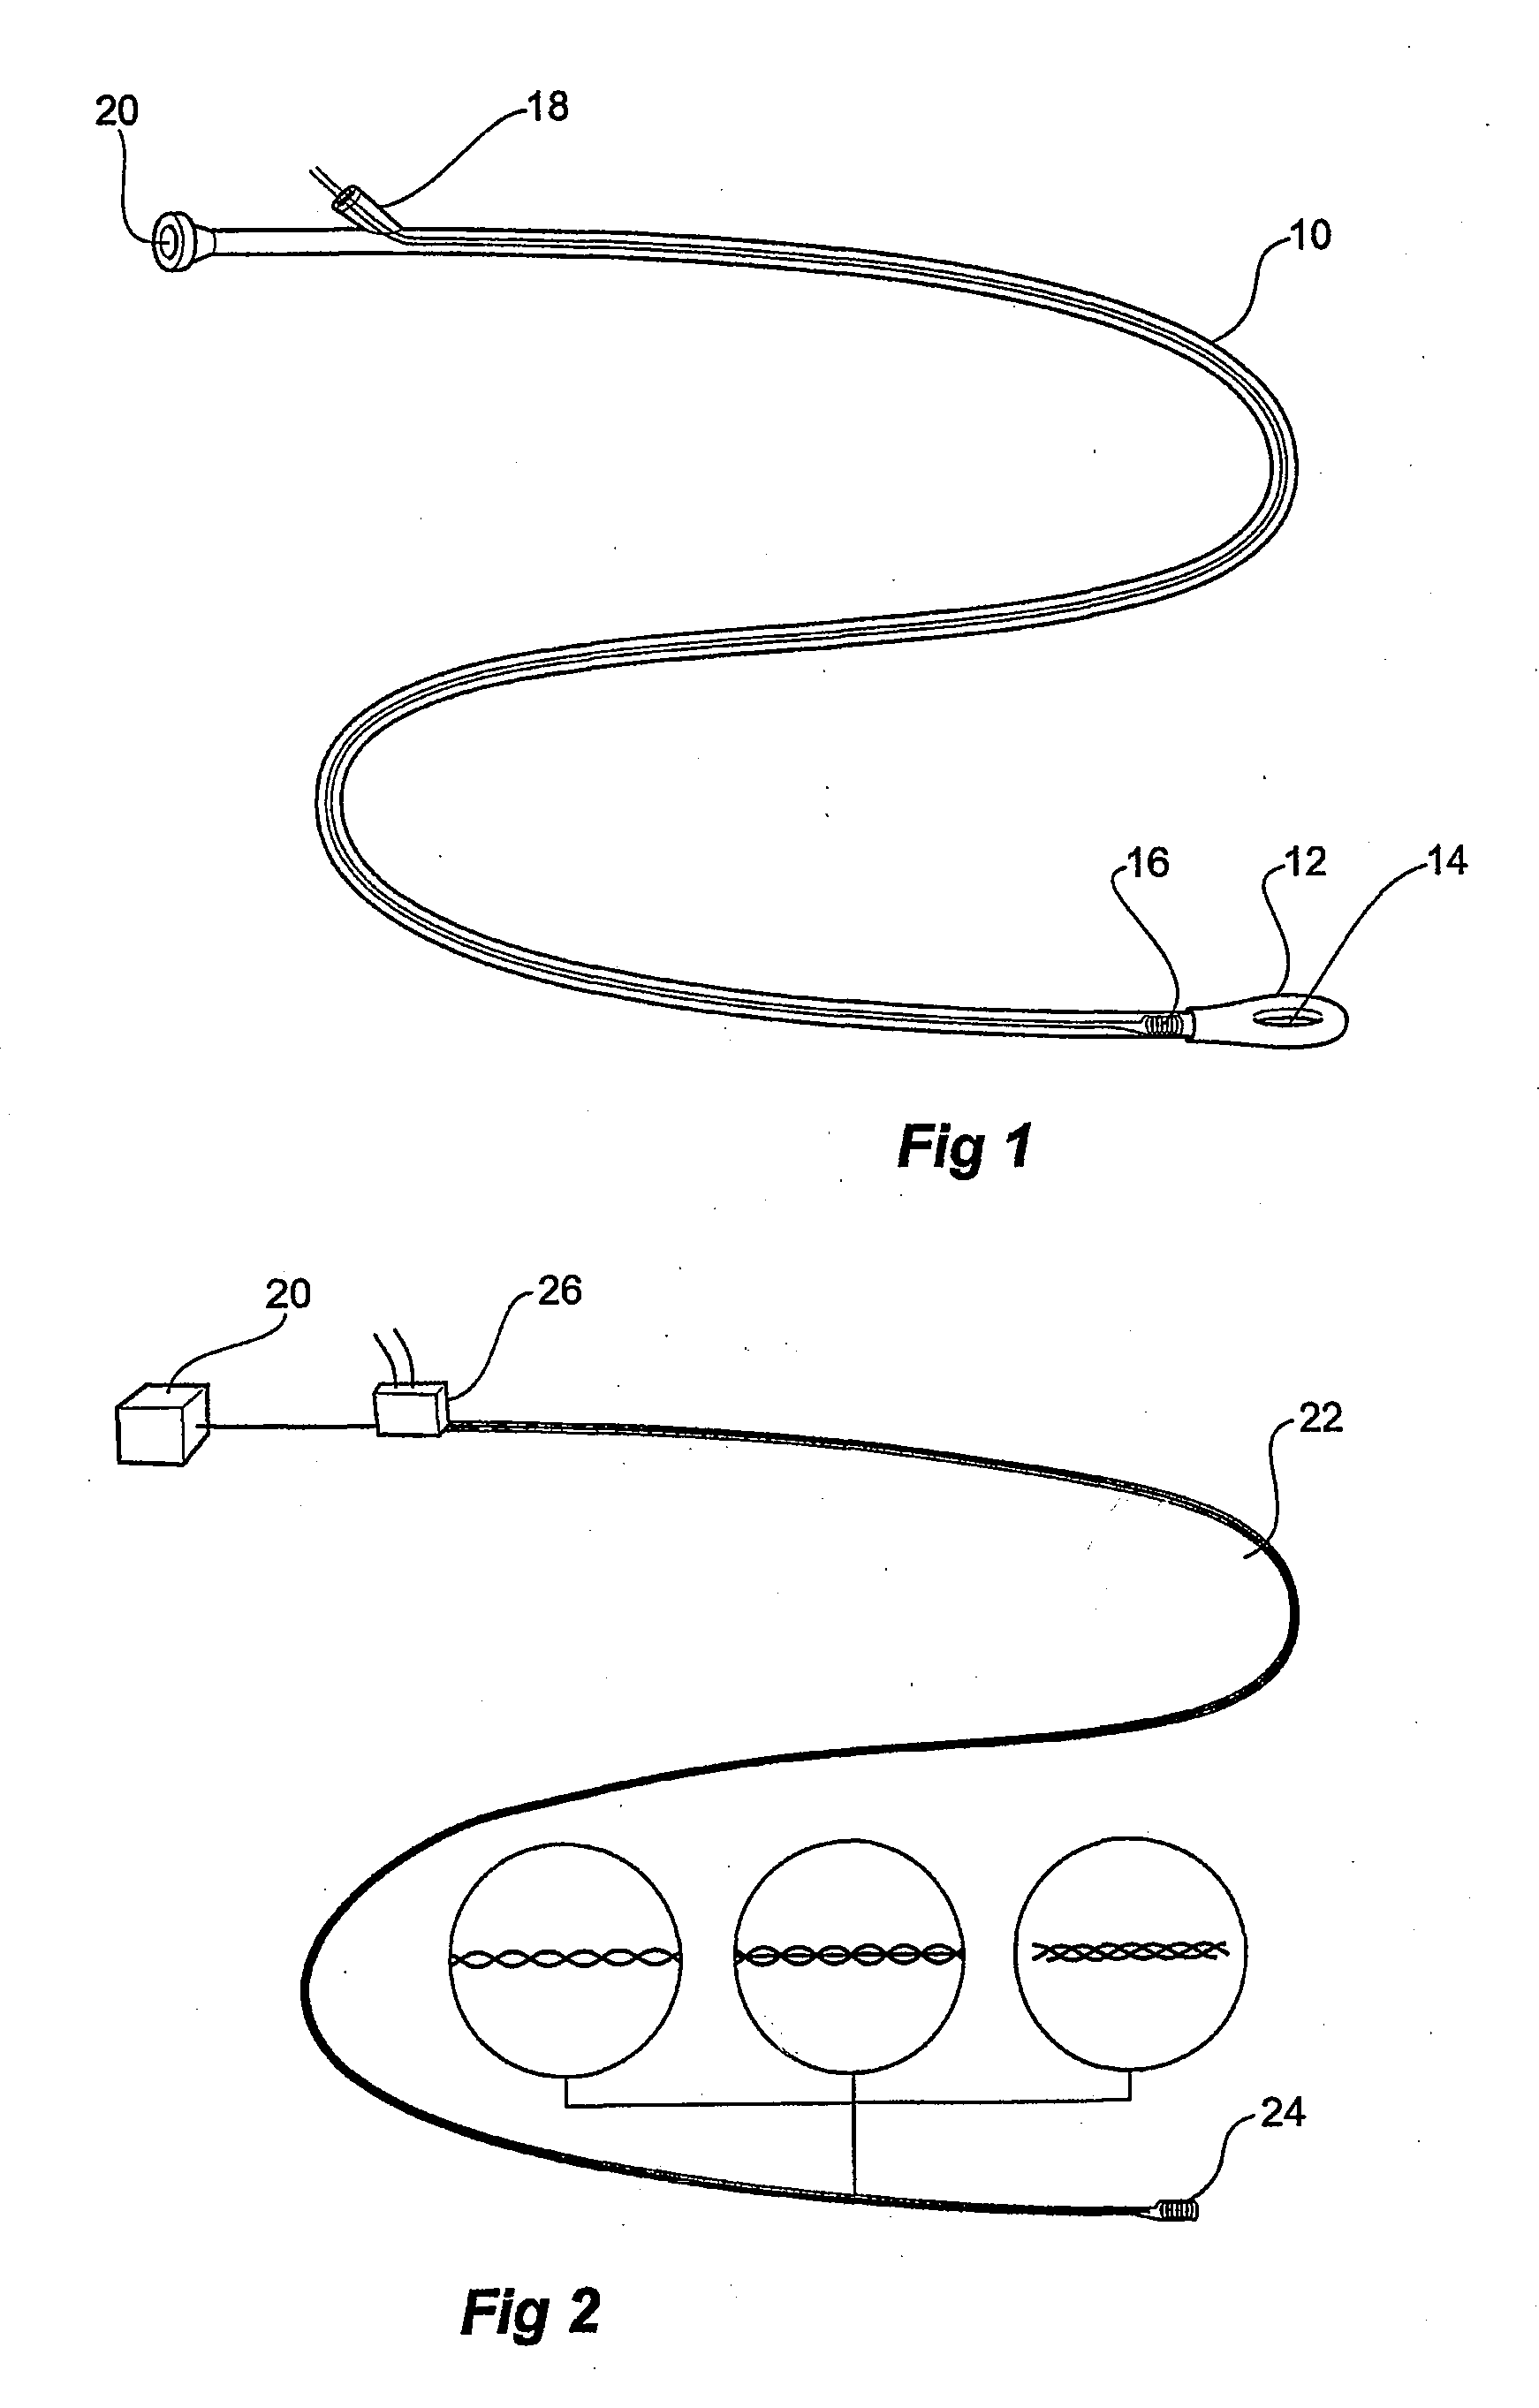 Catheter locator apparatus and method of use